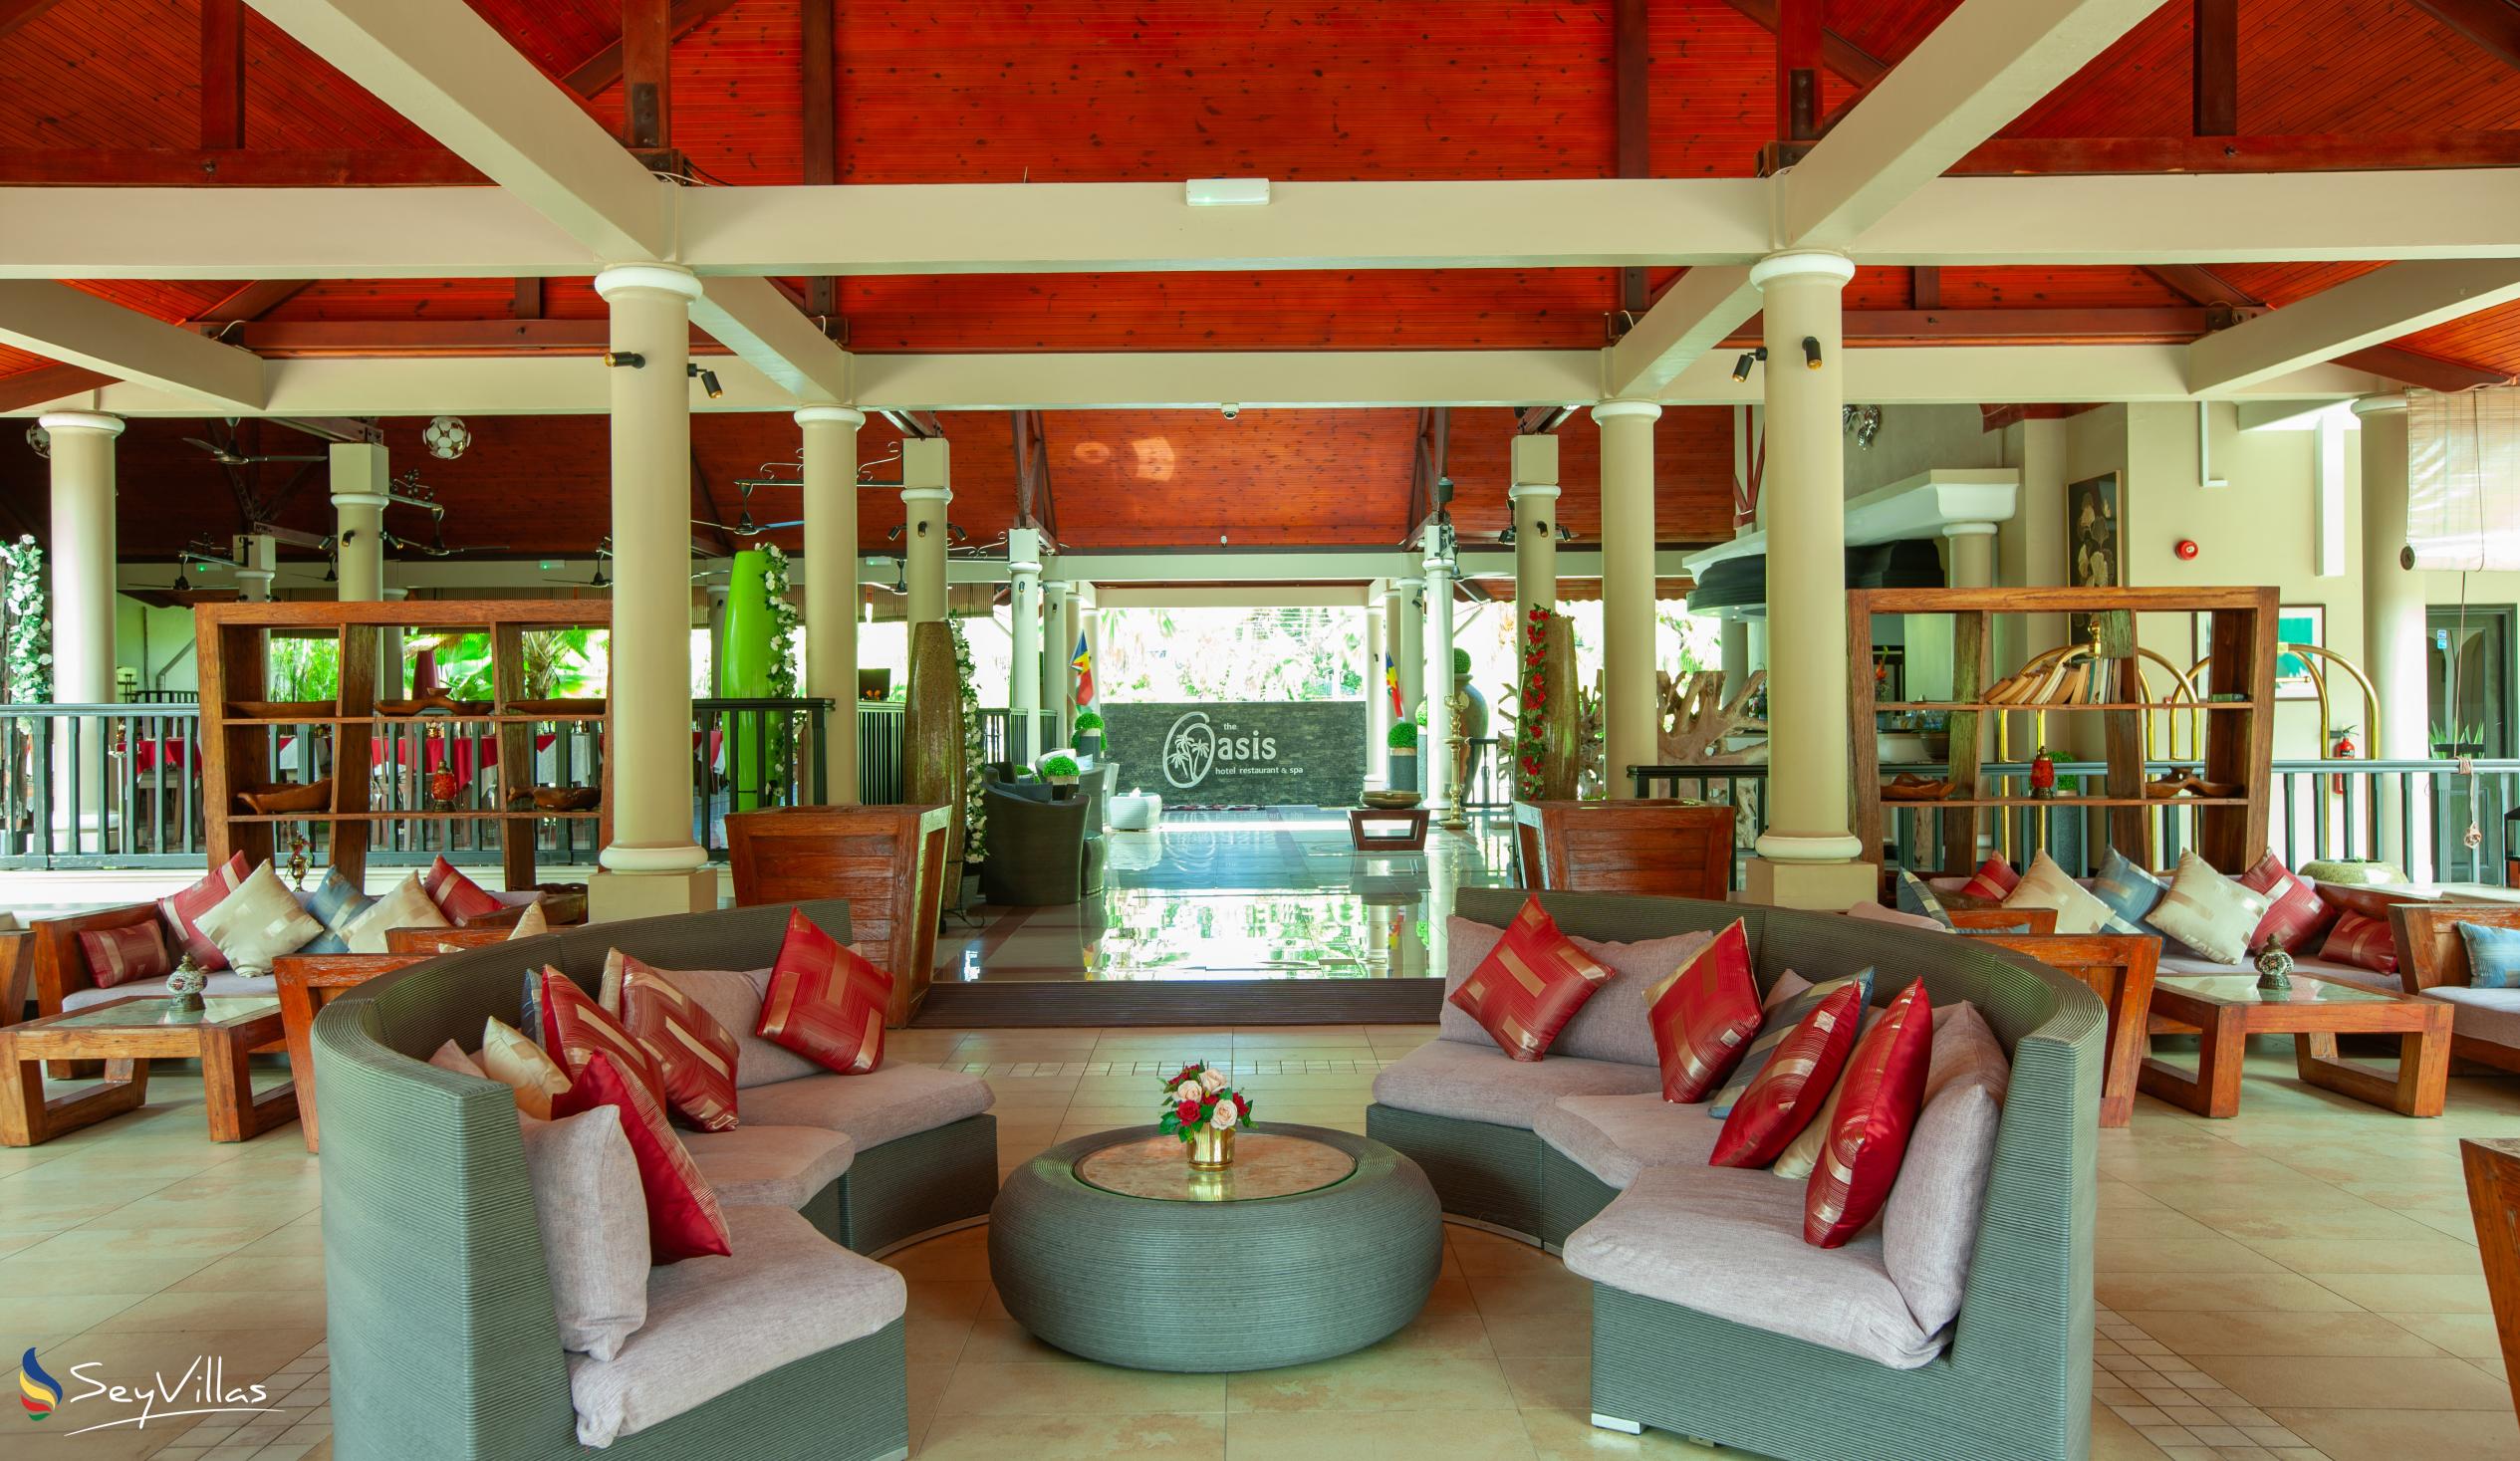 Photo 17: Oasis Hotel, Restaurant & Spa - Indoor area - Praslin (Seychelles)